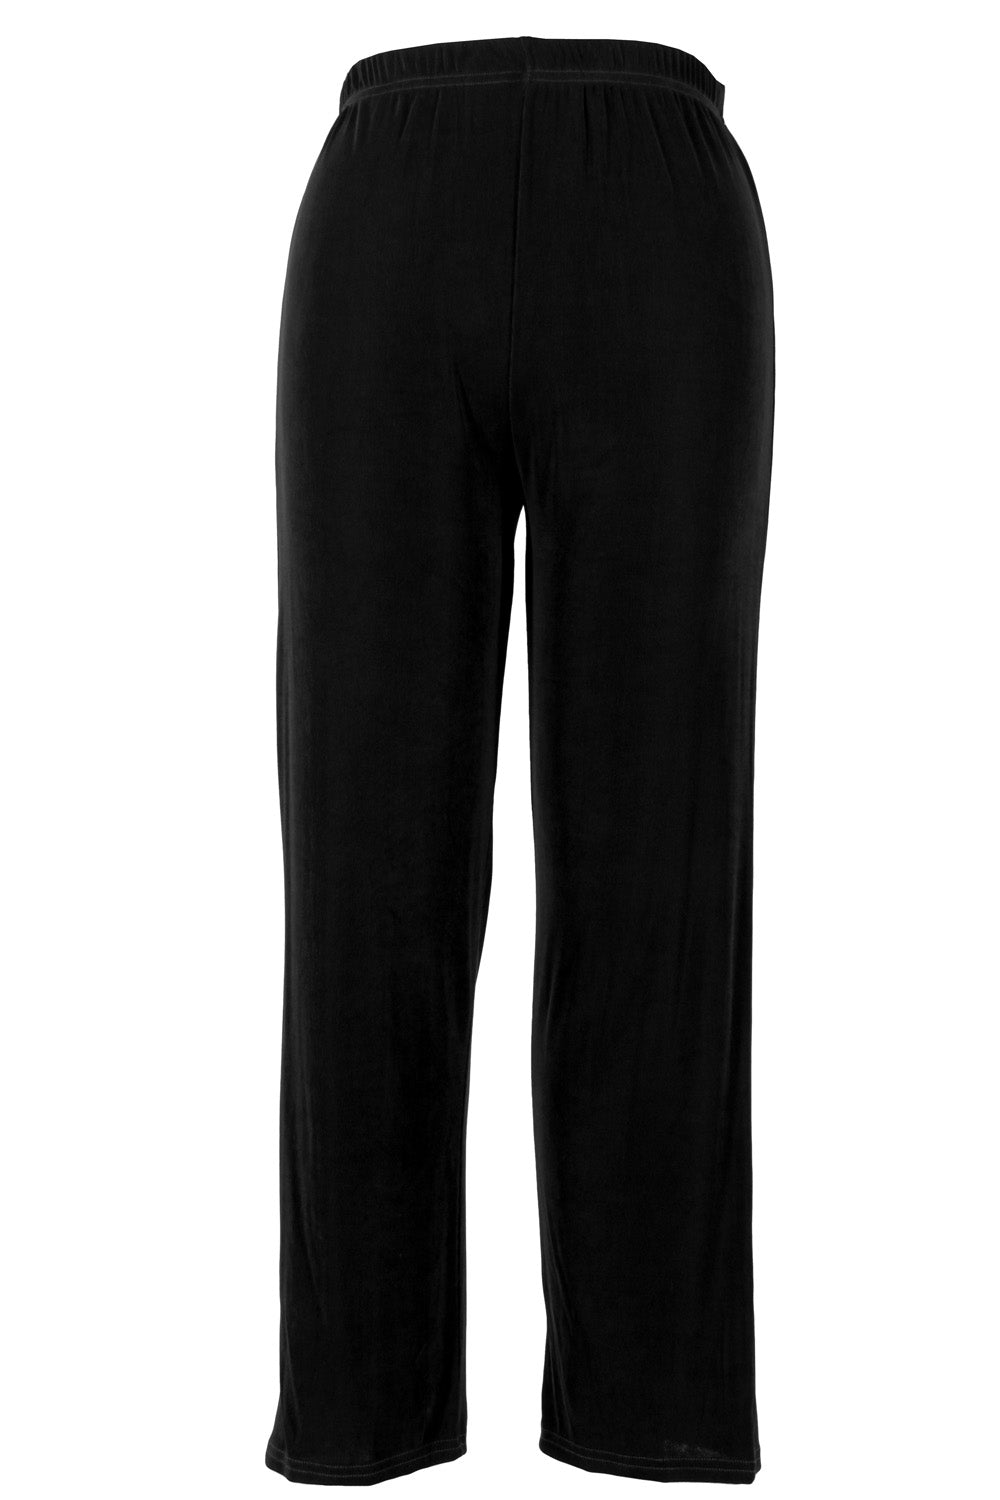 Jostar Women's Non Iron Elastic Waist Pants, 500AY-X - Jostar Online